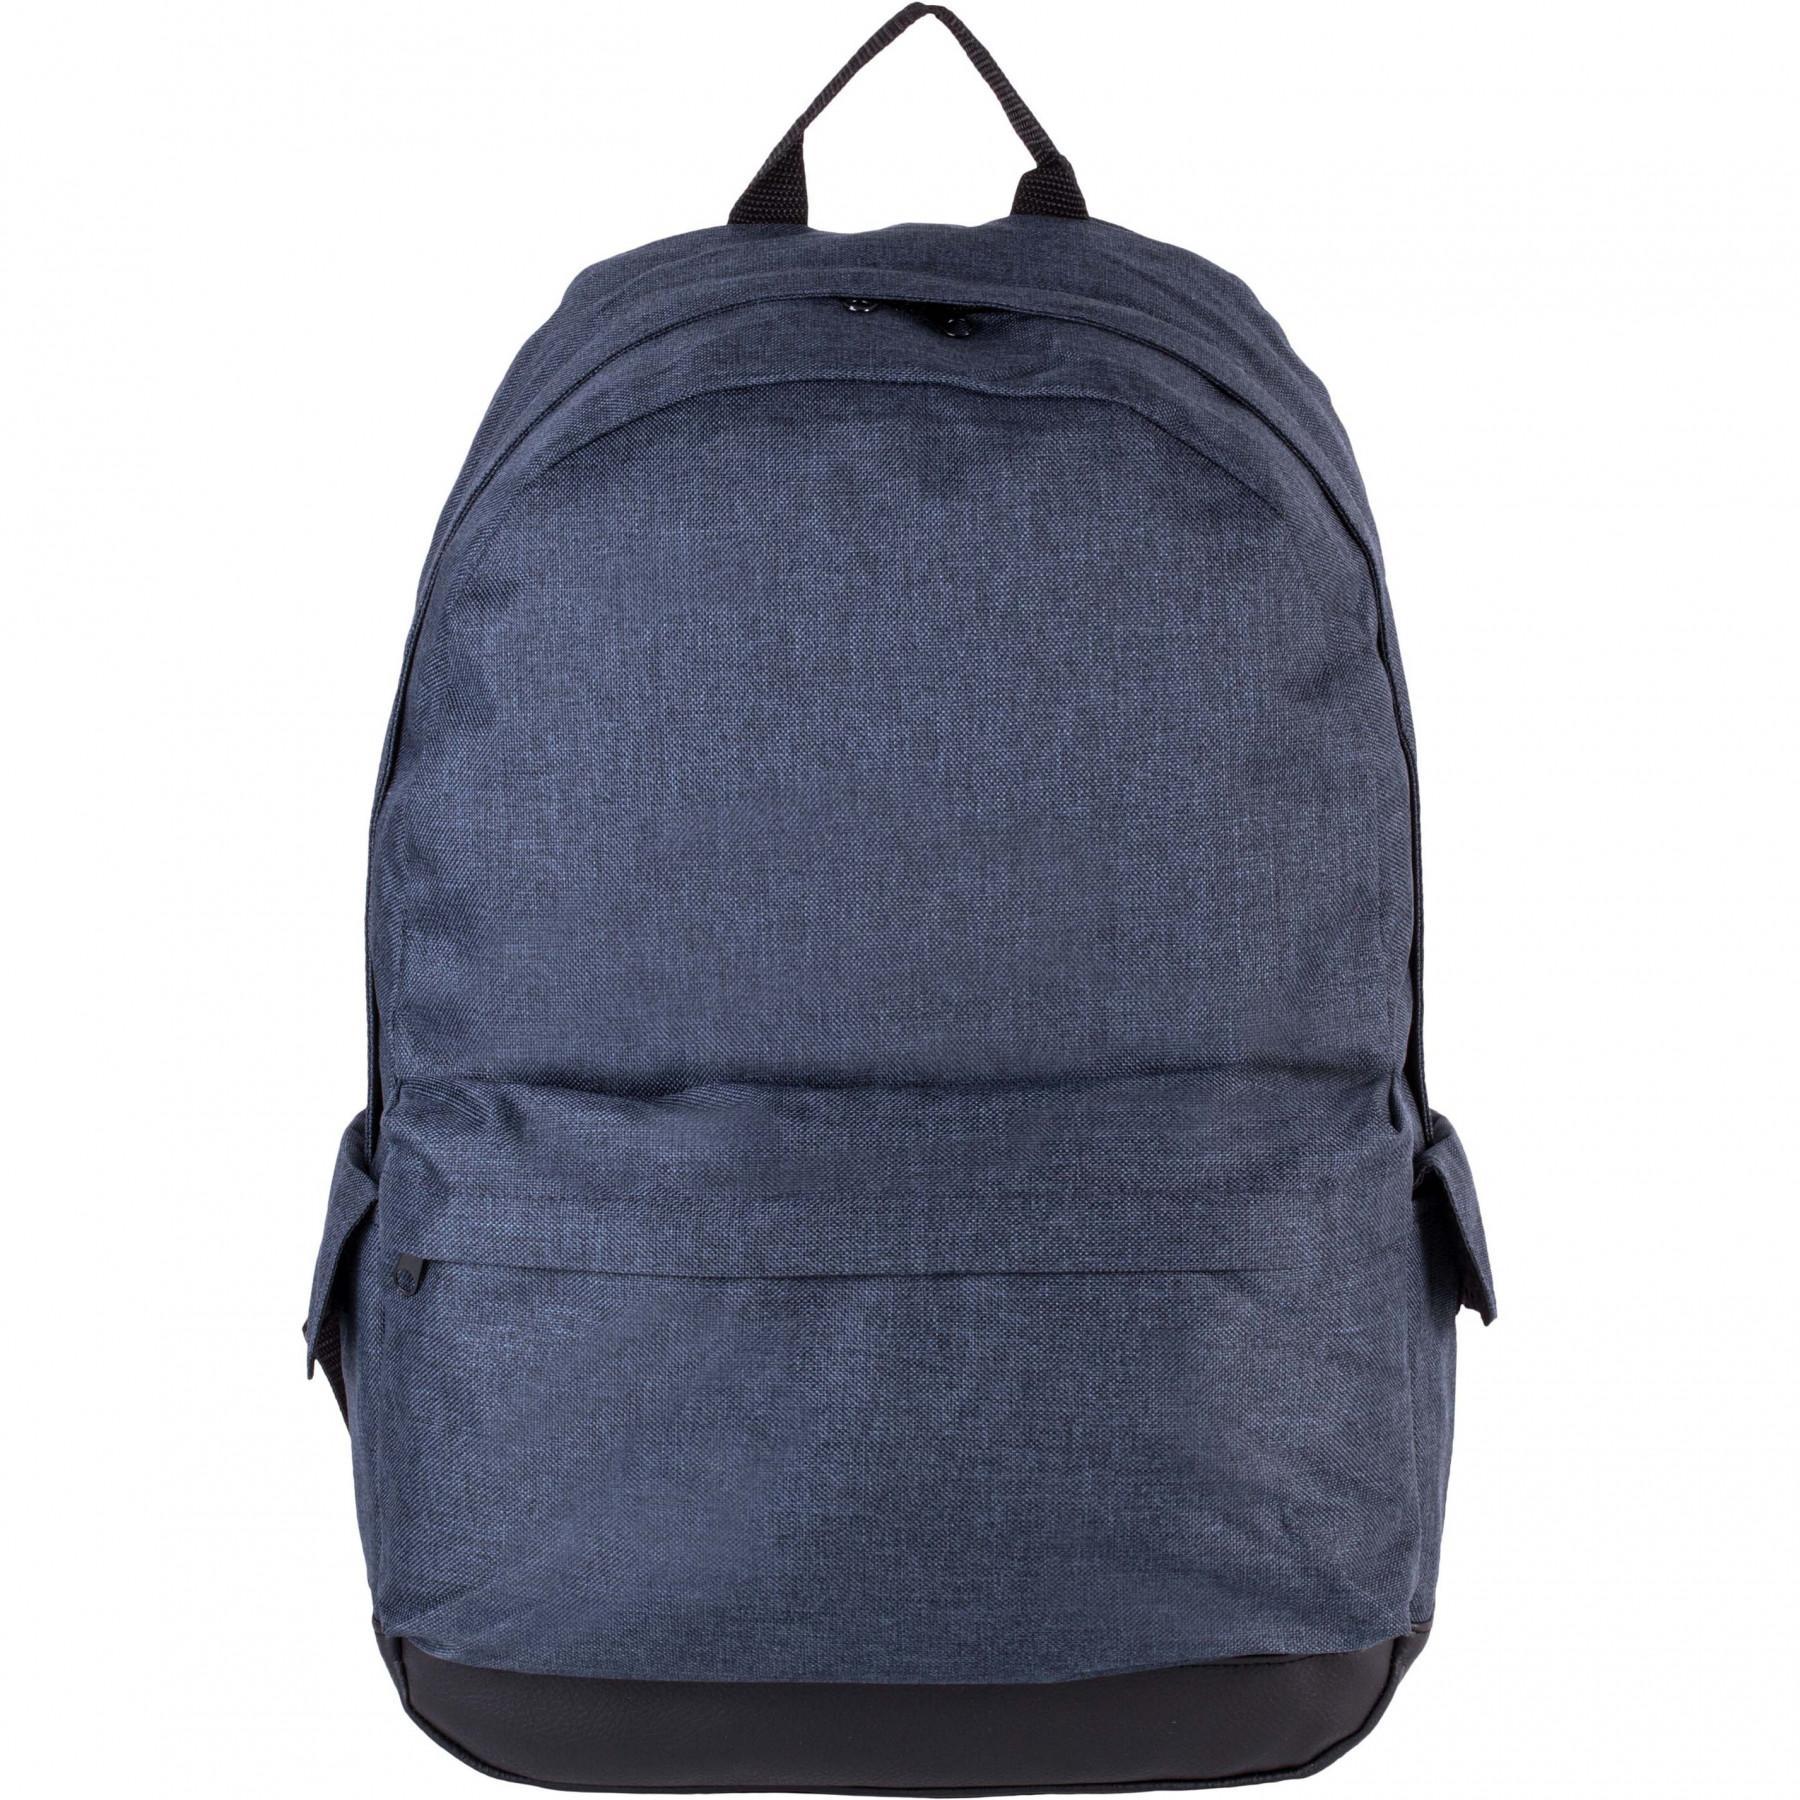 Backpack Kimood polyester